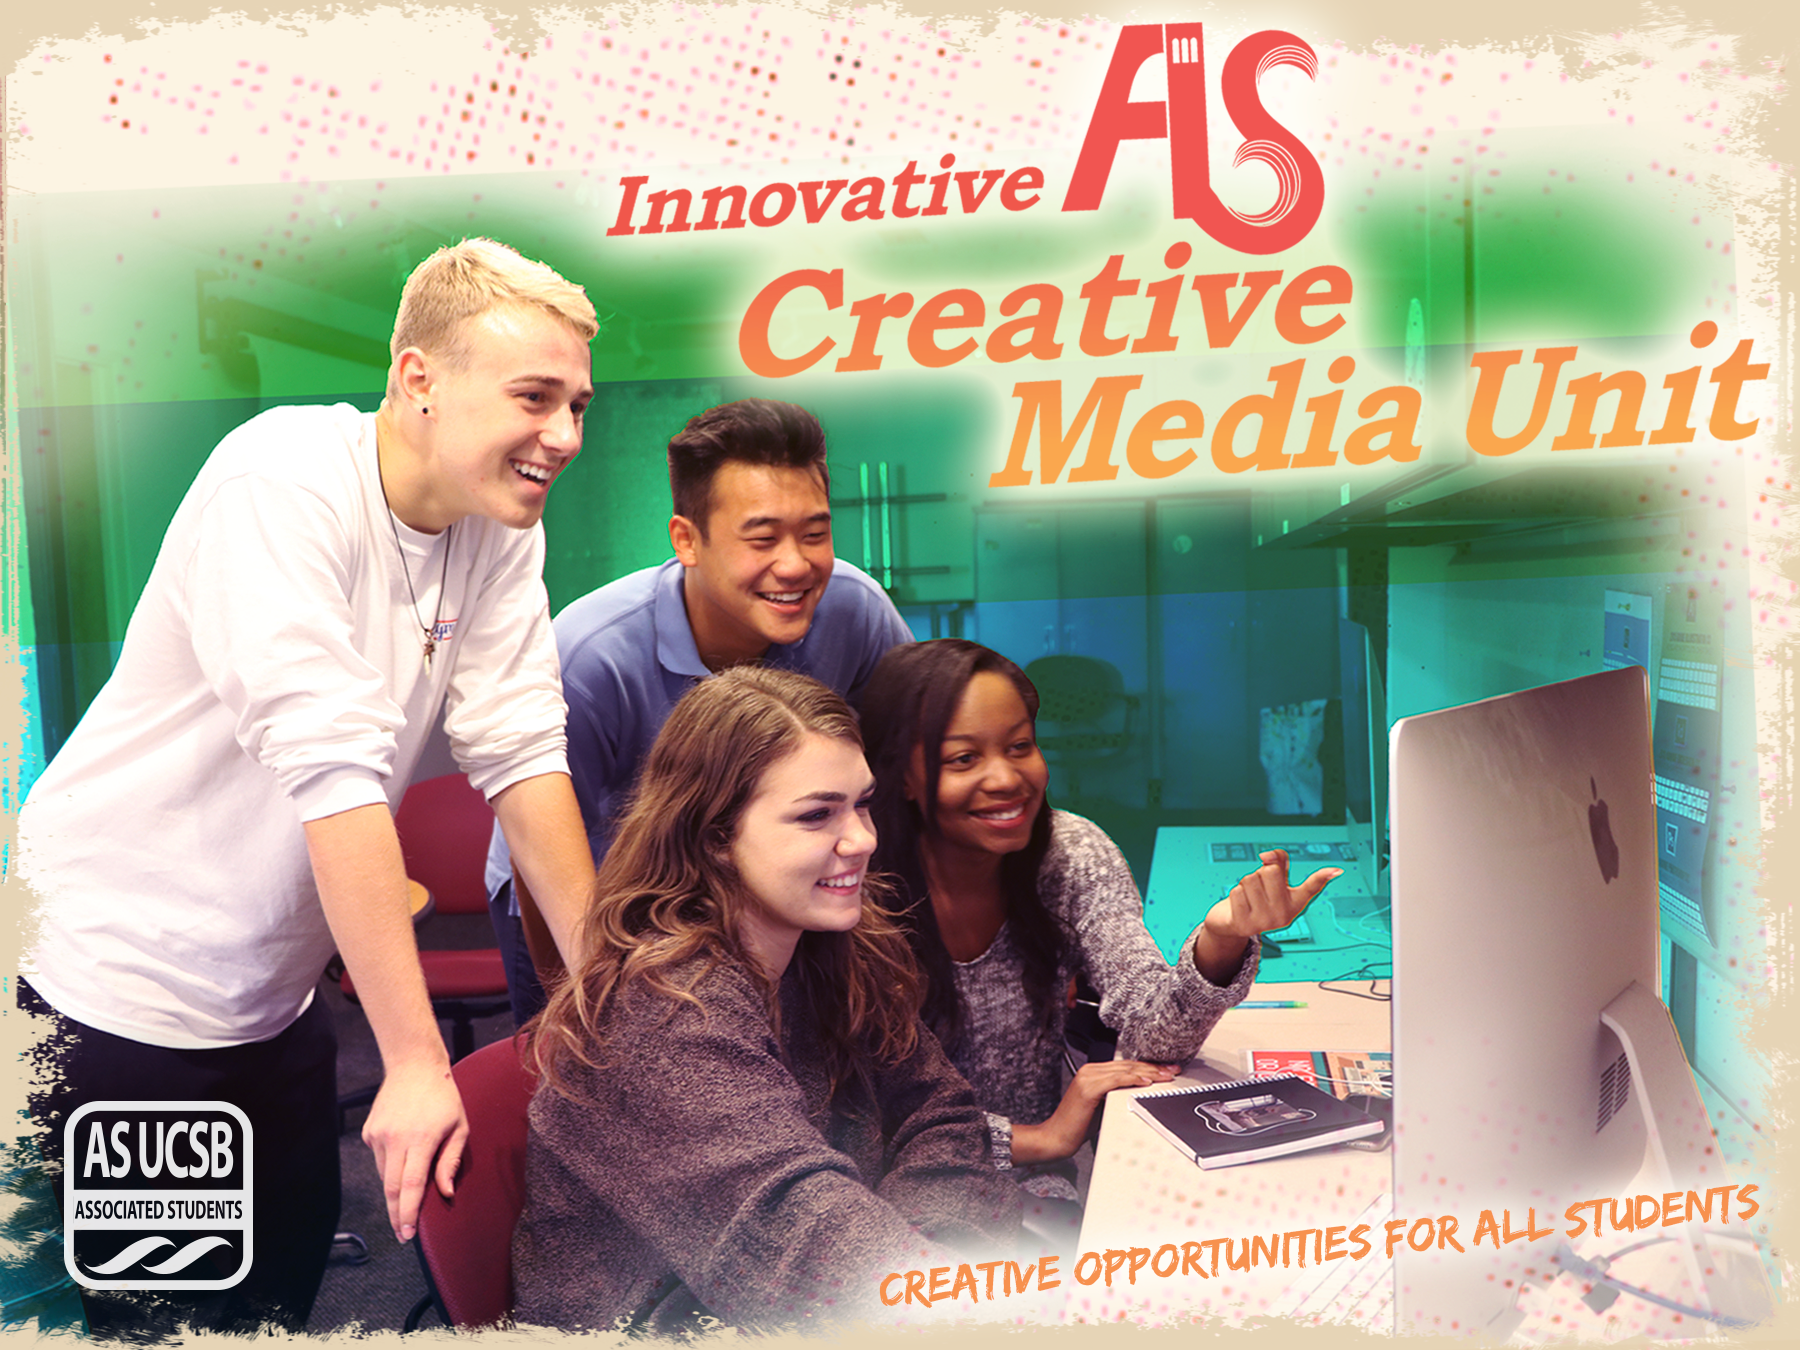 AS One creative media unit